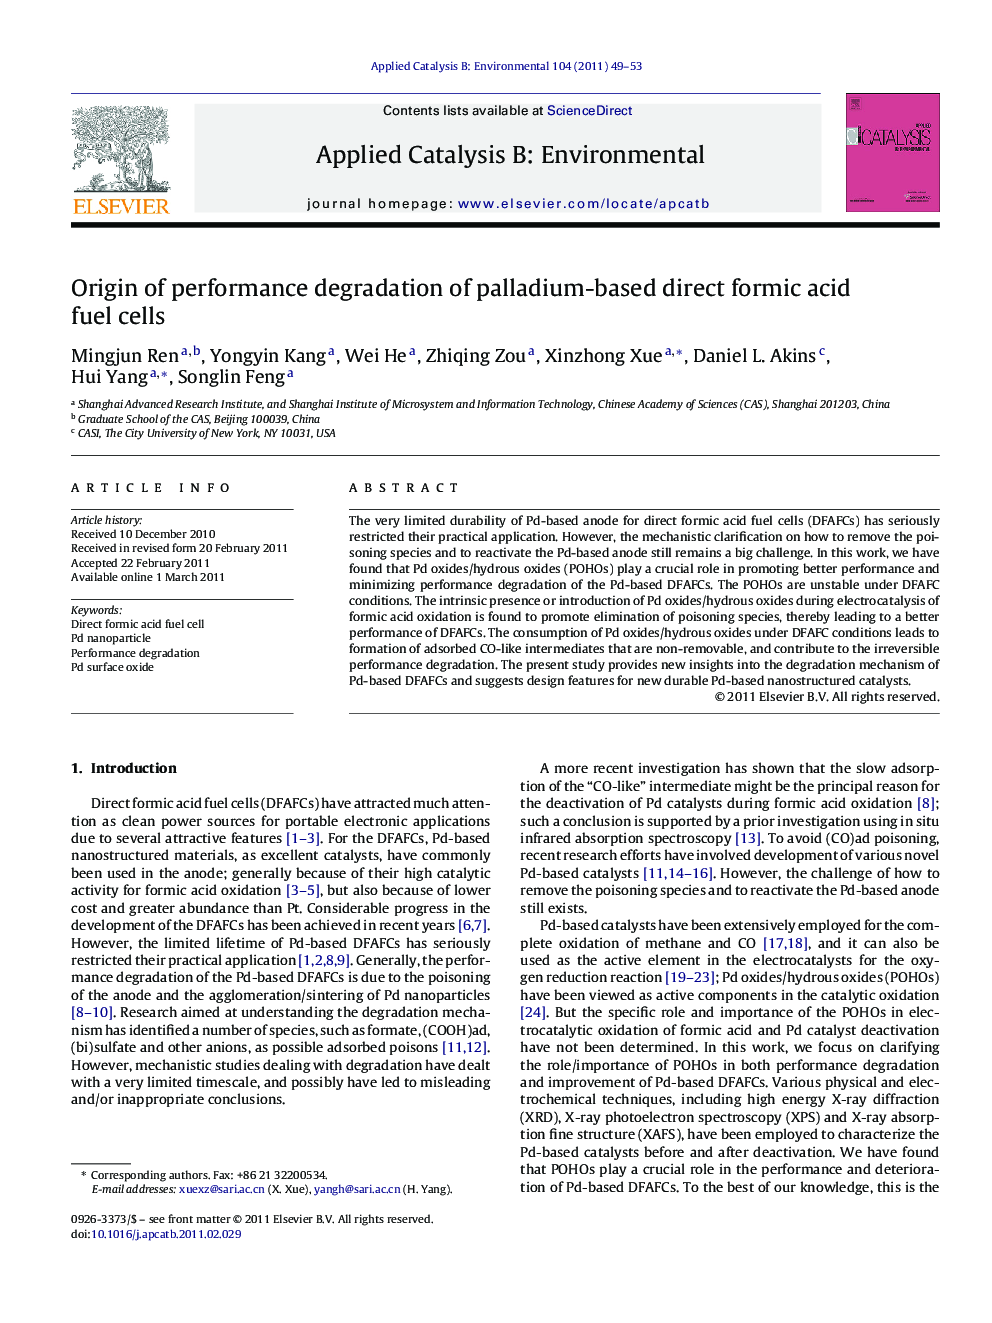 Origin of performance degradation of palladium-based direct formic acid fuel cells